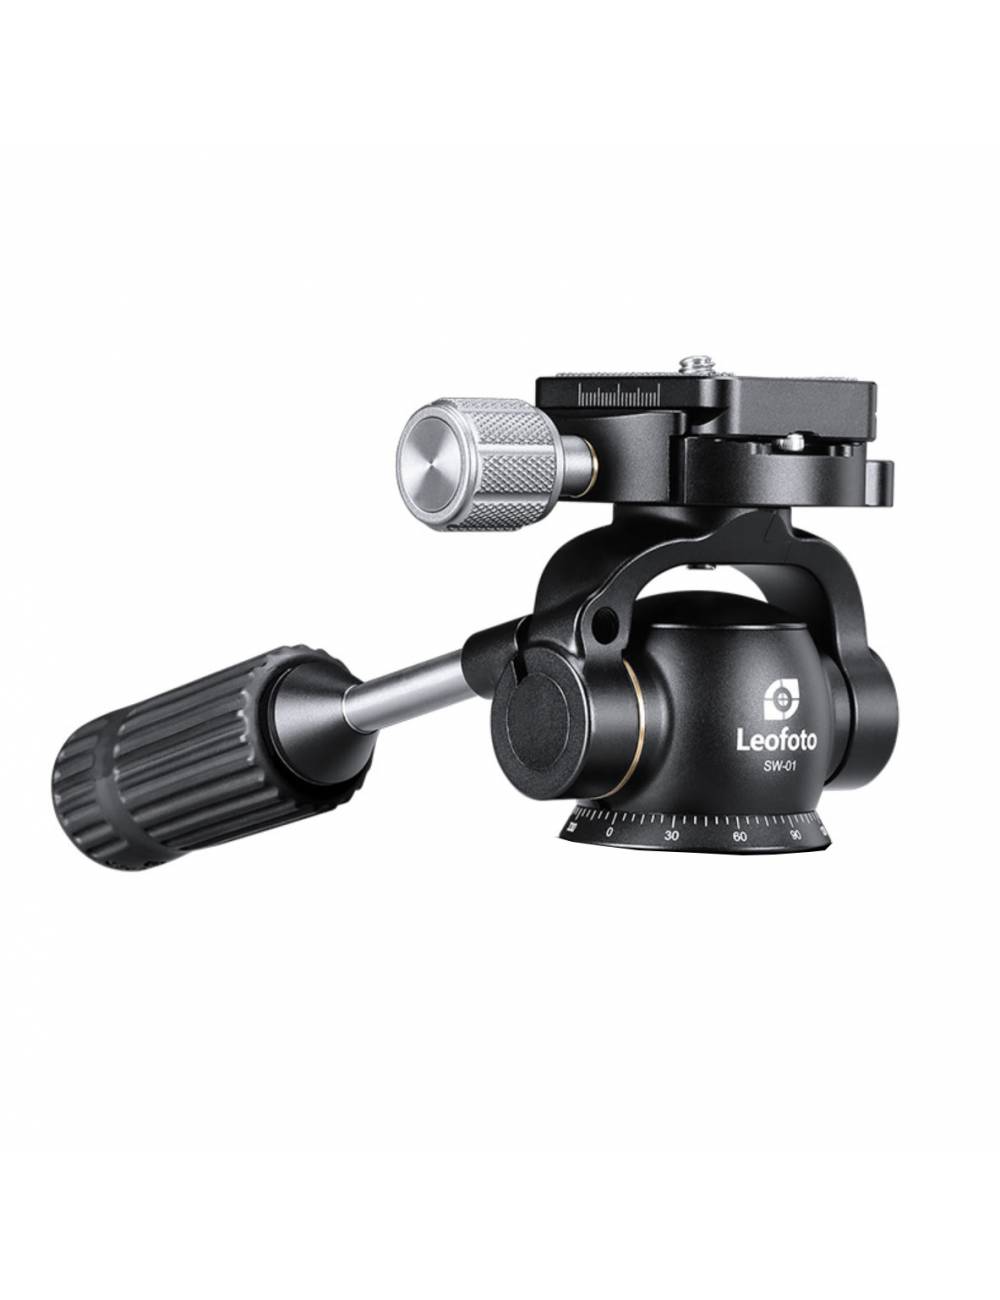 Leofoto SW-01 Mini Fluid Head for Binoculars and Camera, Arca Swiss